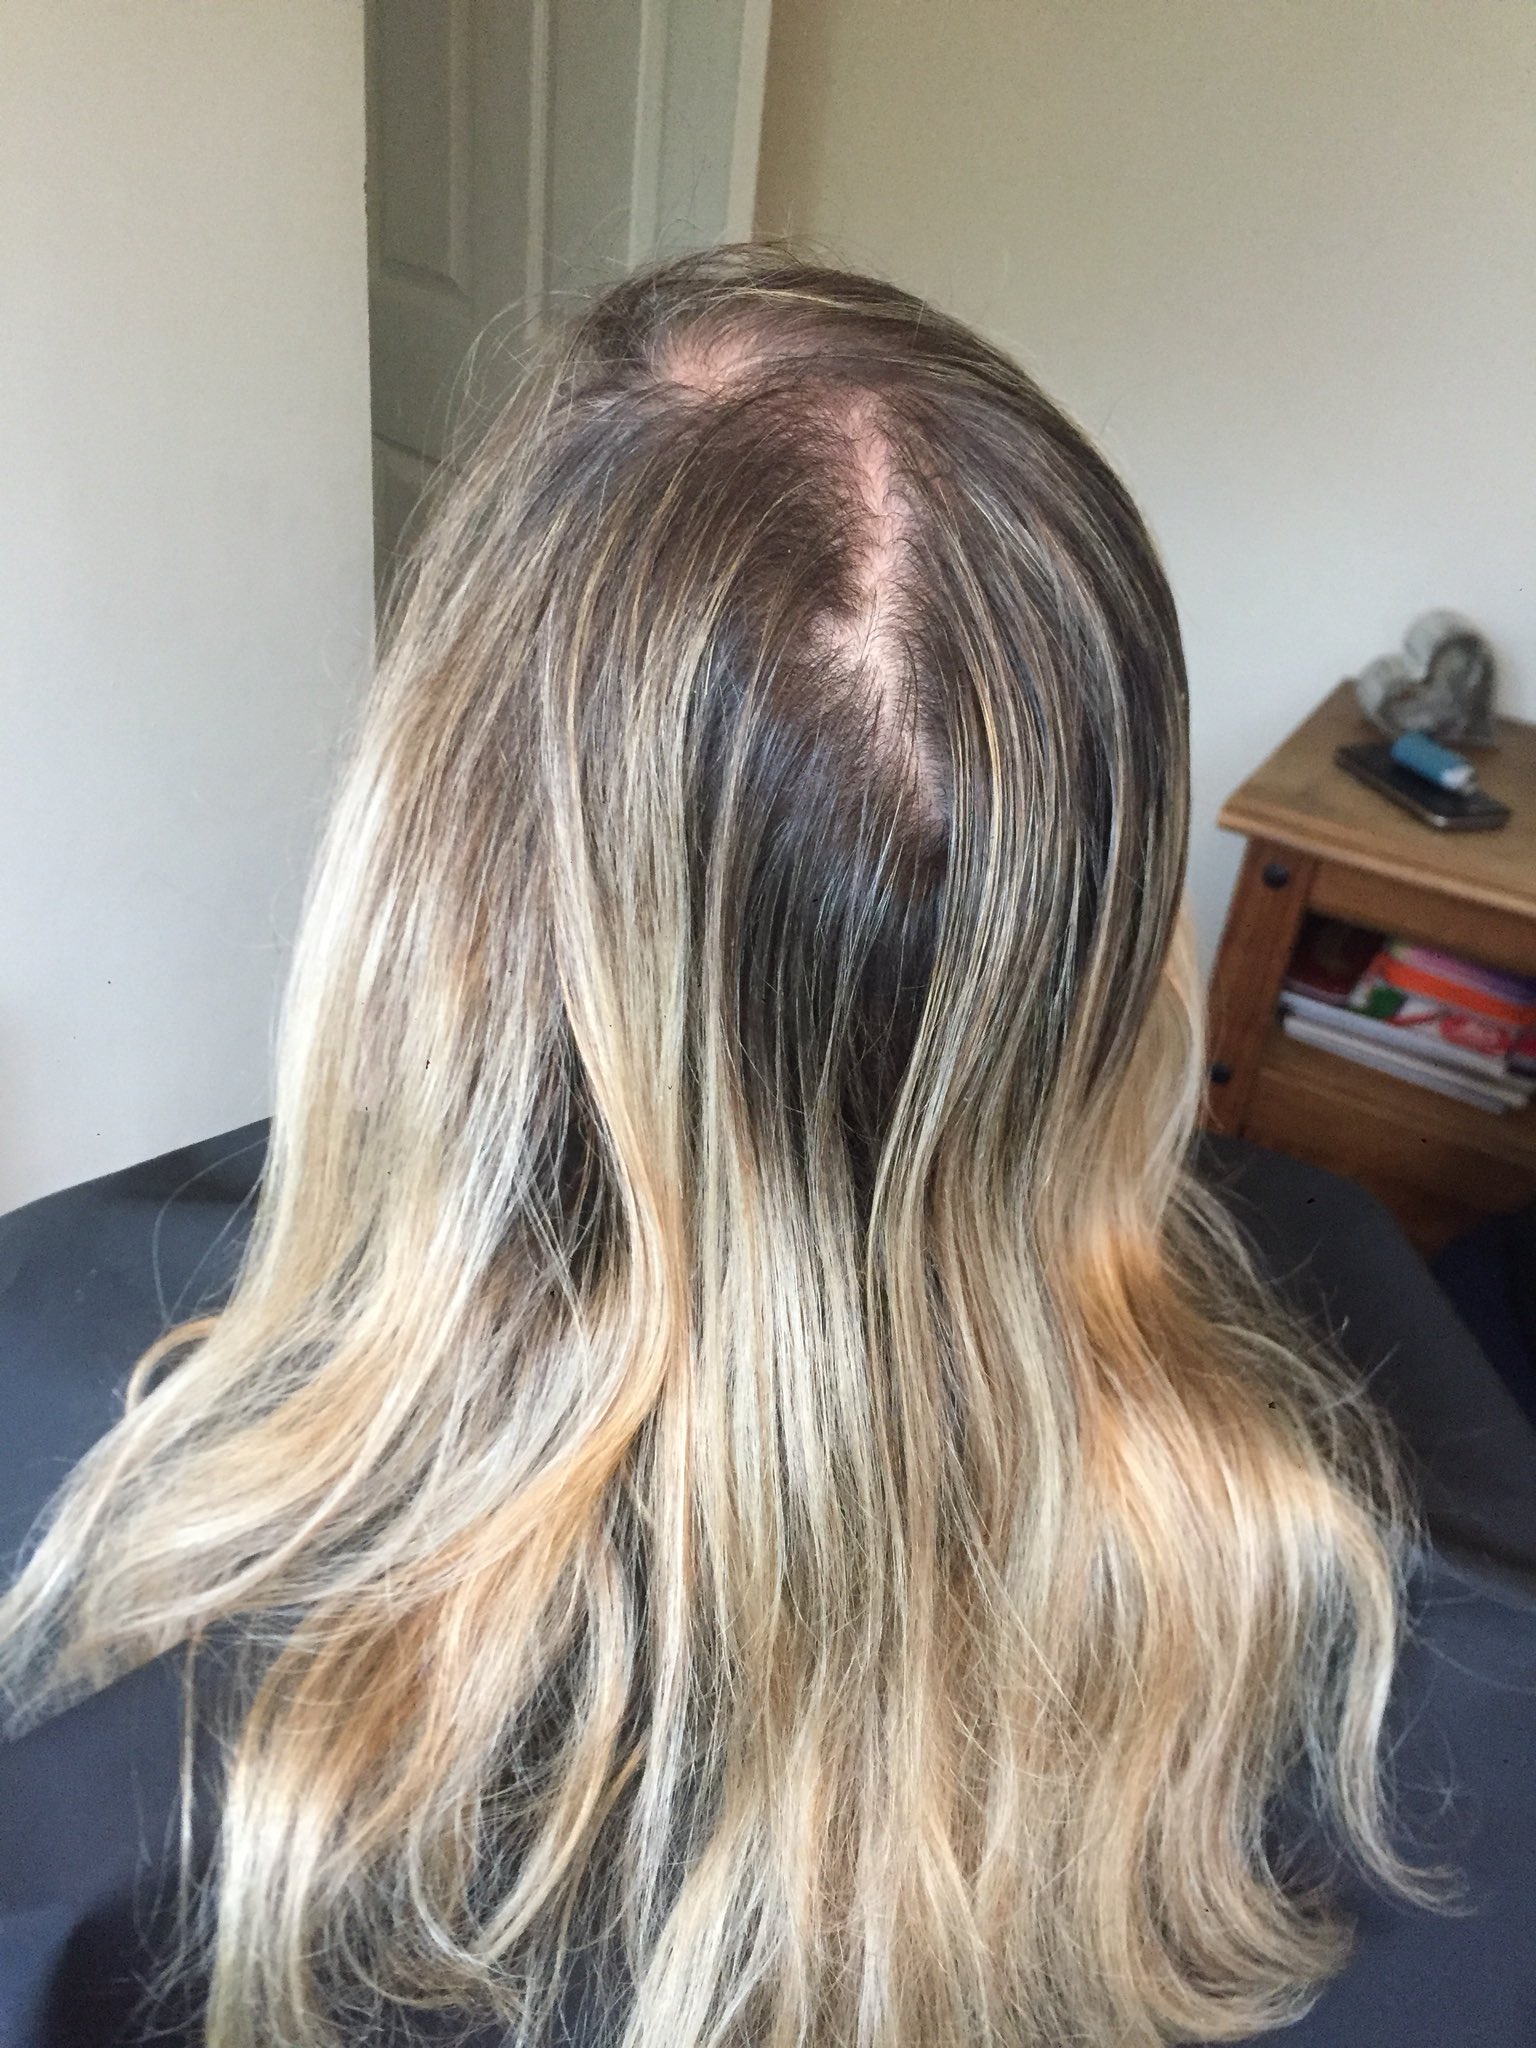 Hair by on Twitter: "Half Head Highlights • Olaplex • And Blow Dry #loreal #tigi #ghd https://t.co/3ga4SqMTWz" / Twitter